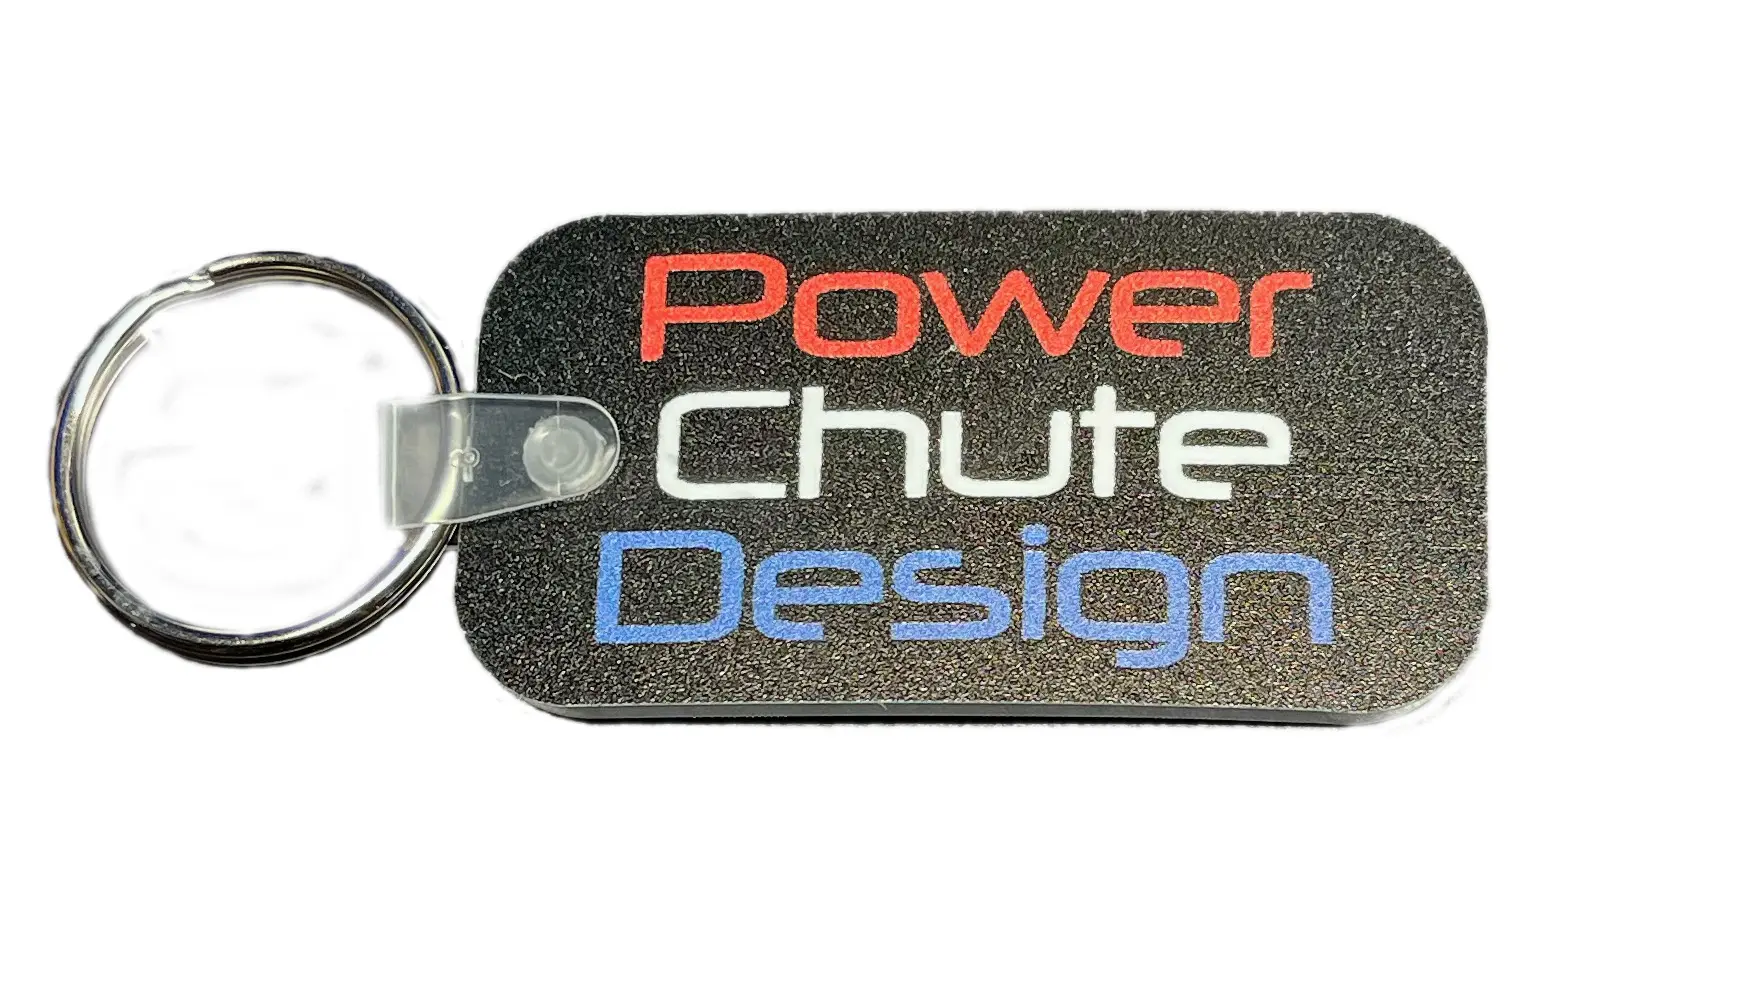 Power Chute Design